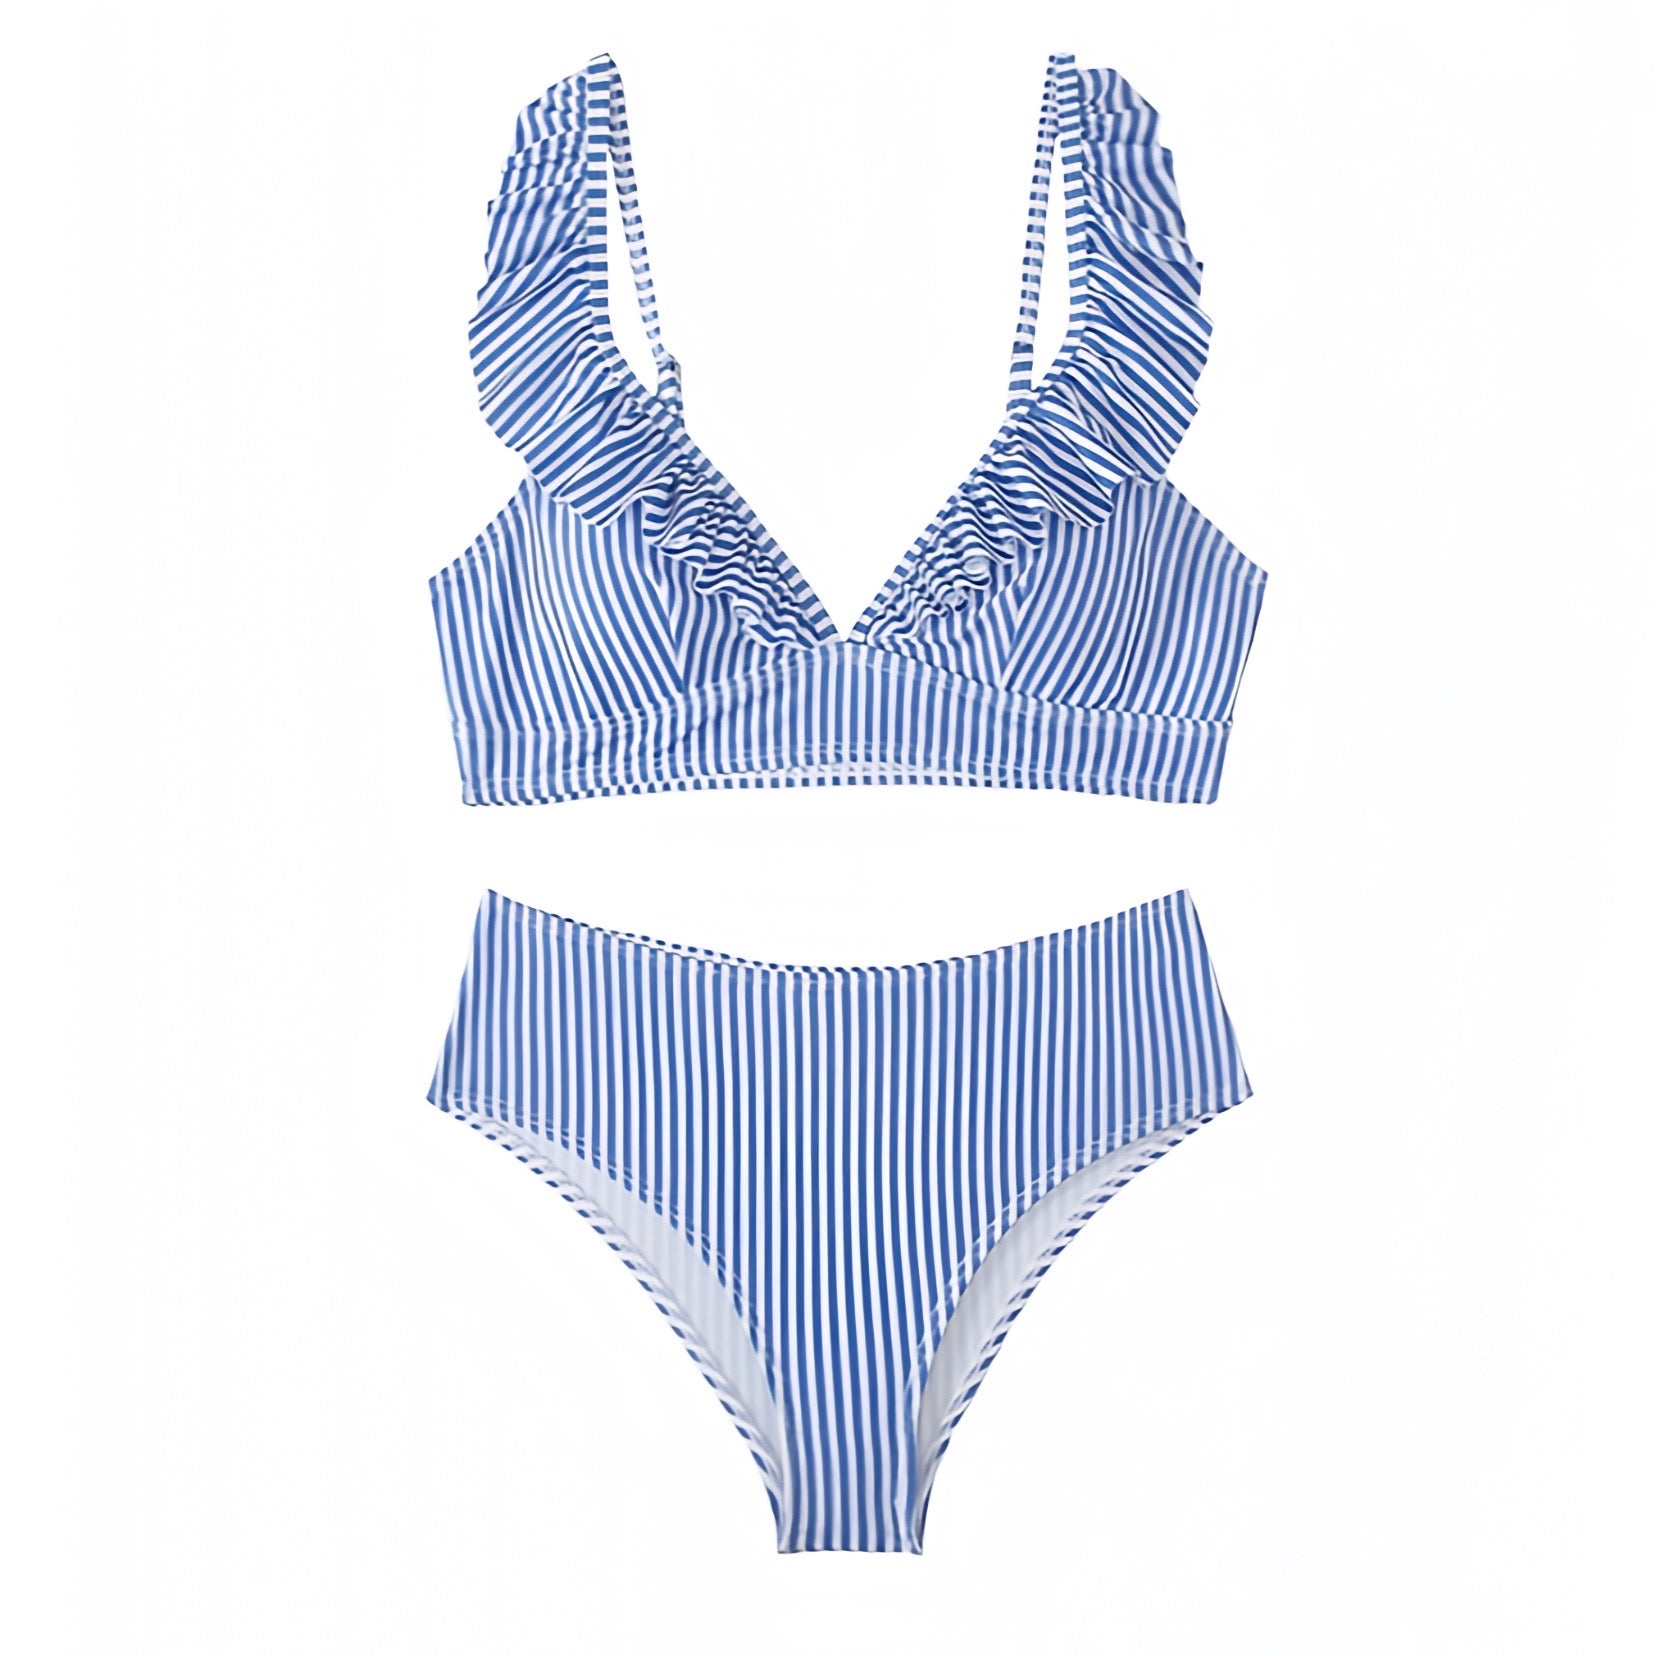 light-blue-and-white-striped-seersucker-layered-ruffle-trim-v-neck-spaghetti-strap-push-up-wireless-thong-cheeky-triangle-bikini-set-swimsuit-swimwear-bathing-suit-two-piece-top-bottoms-spring-2024-summer-chic-trendy-women-ladies-elegant-preppy-style-coastal-granddaughter-nautical-hamptons-european-vacation-beach-wear-revolve-hill-house-minow